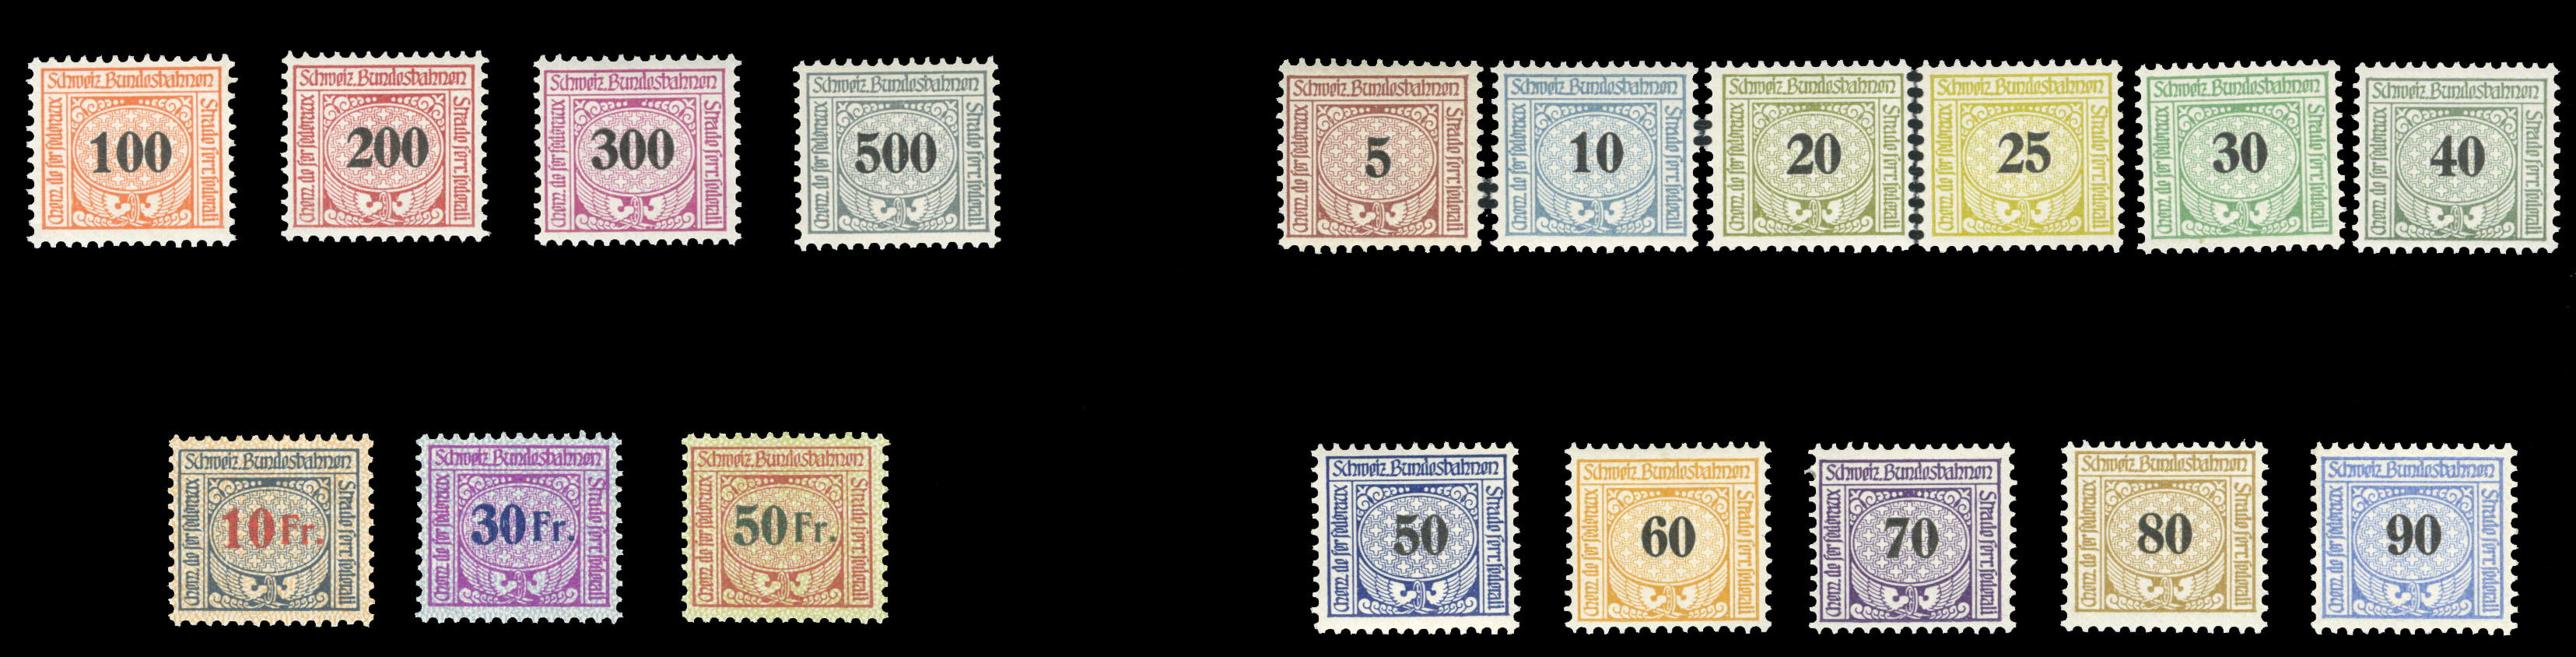 Lot 1317 - VATICAN CITY  Flight Covers  -  Cherrystone Auctions U.S. & Worldwide Stamps & Postal History